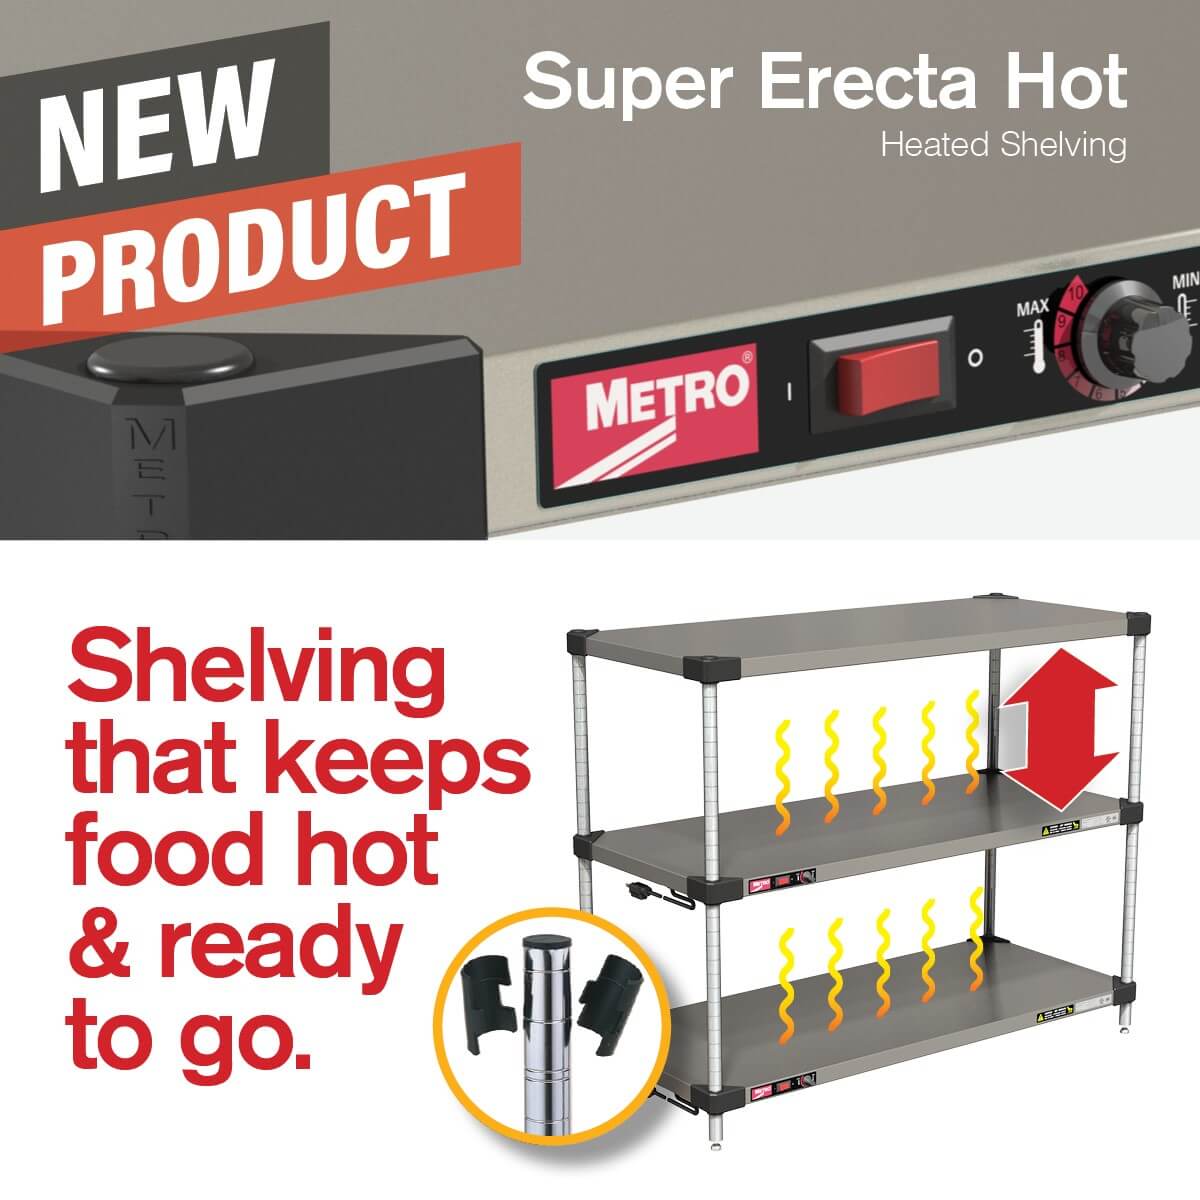 Metro’s Super Erecta Hot Shelving